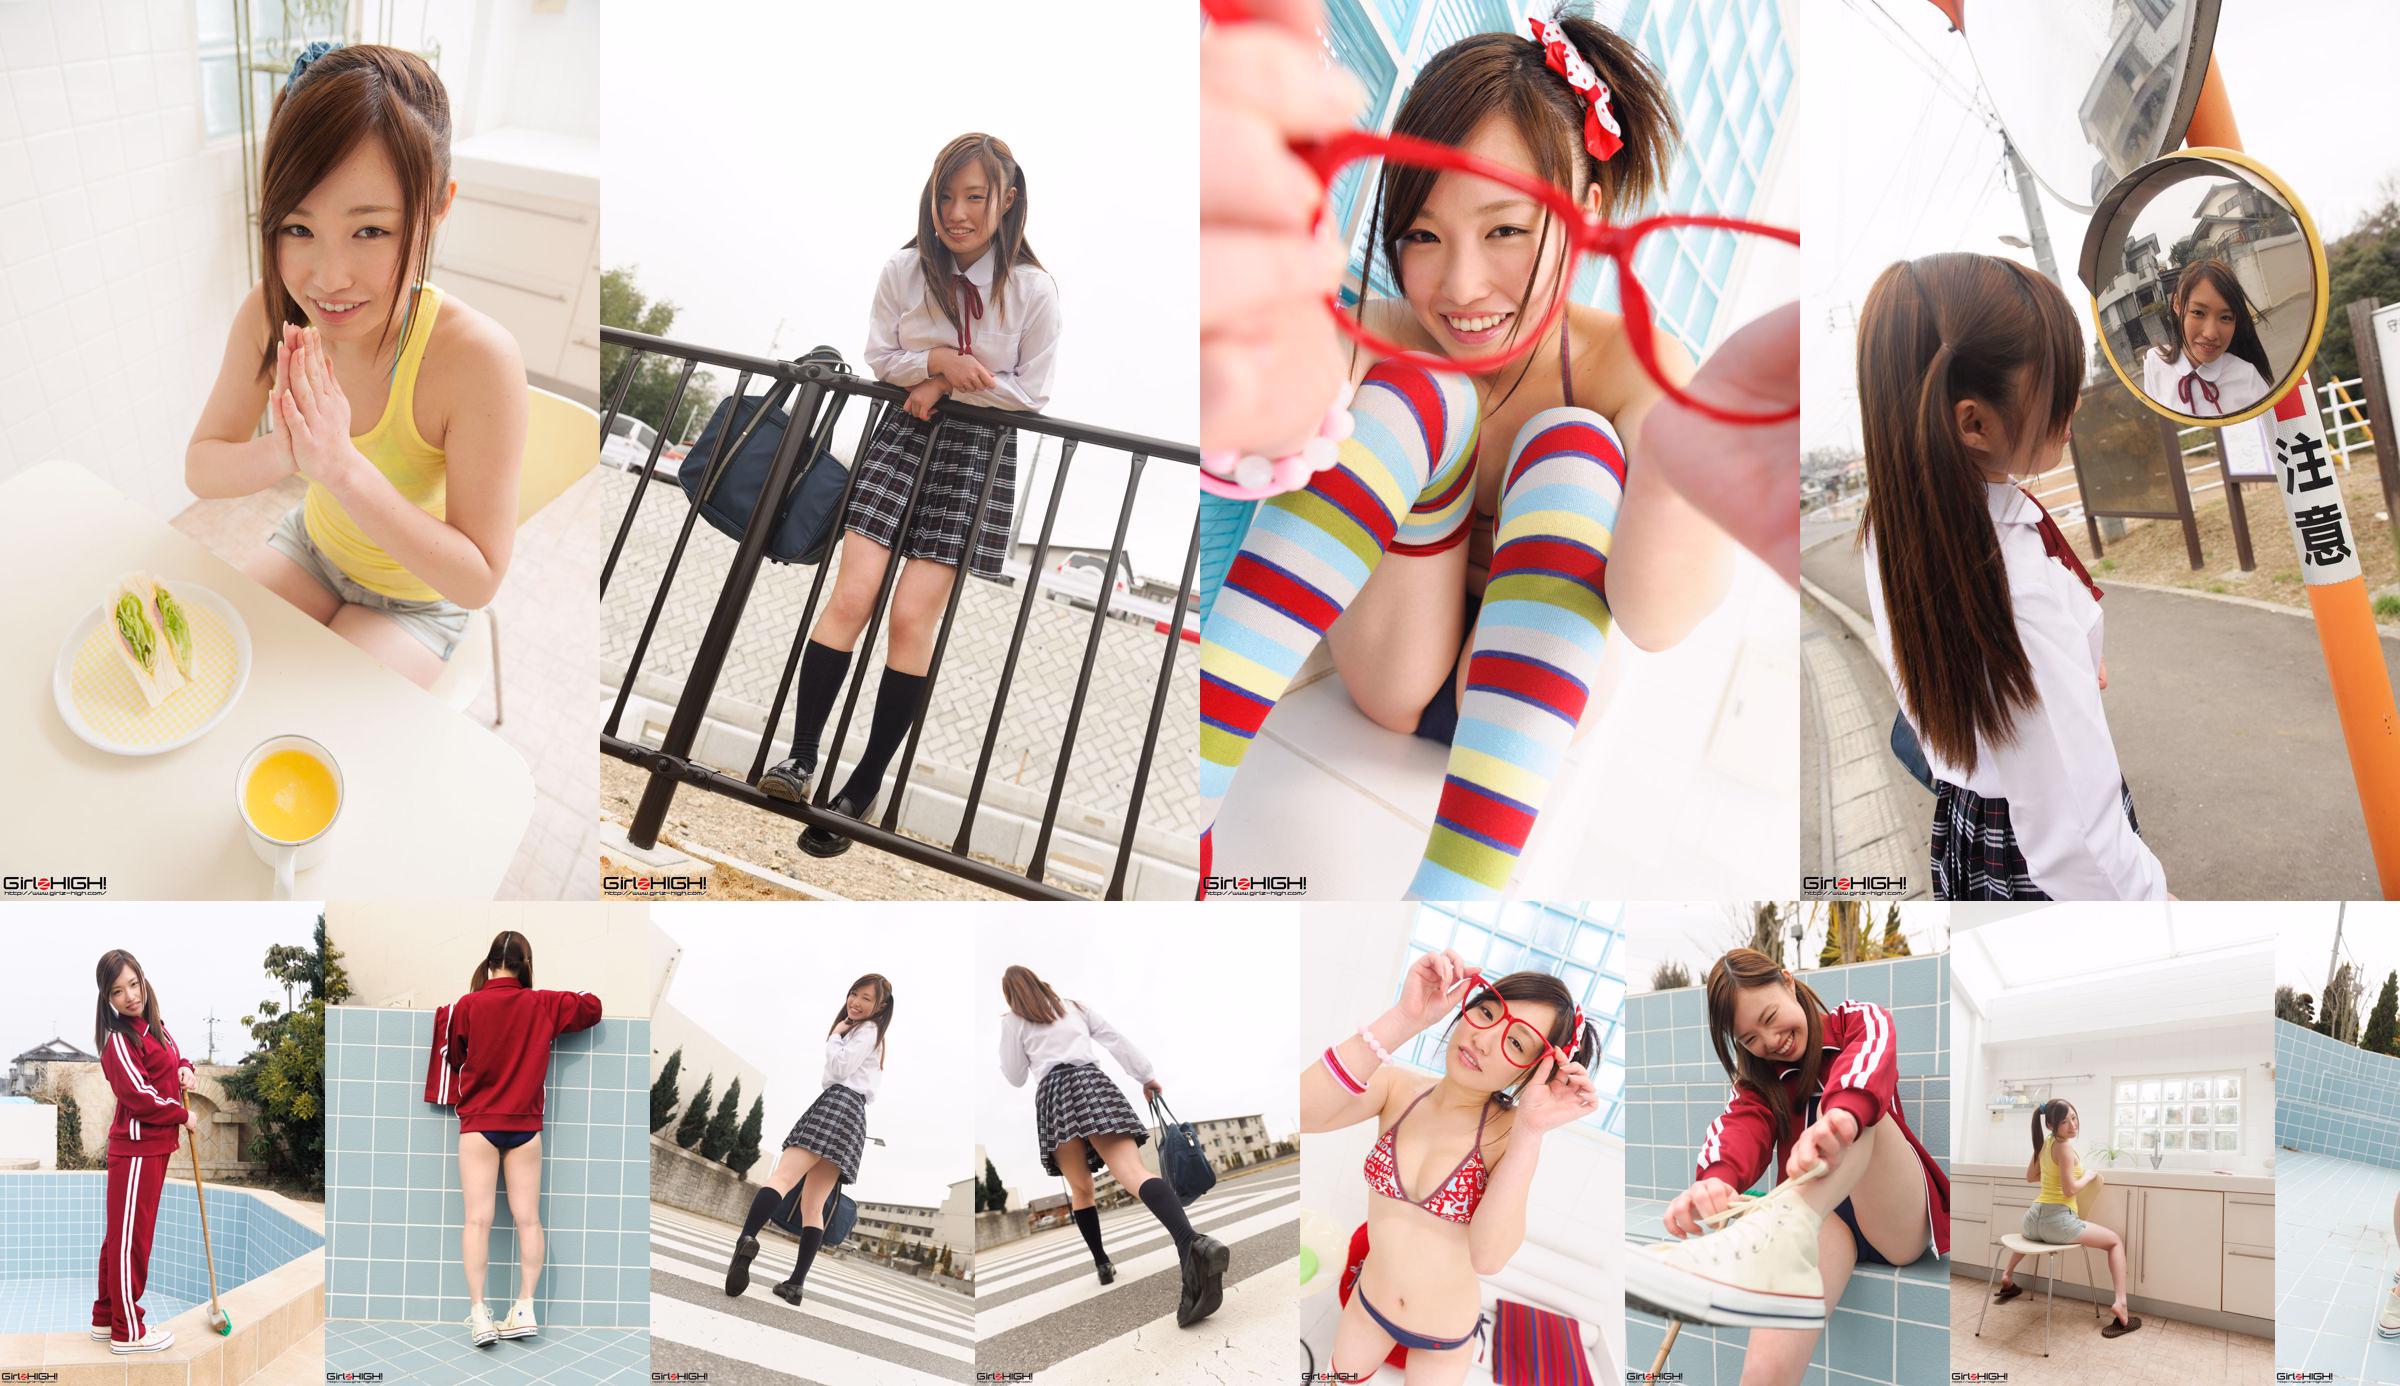 [Girlz-High] Yuno Natsuki Yuno Natsuki / Yuno Natsuki Gravure Gallery-g023 Photoset 03 No.43ccdc Pagina 1